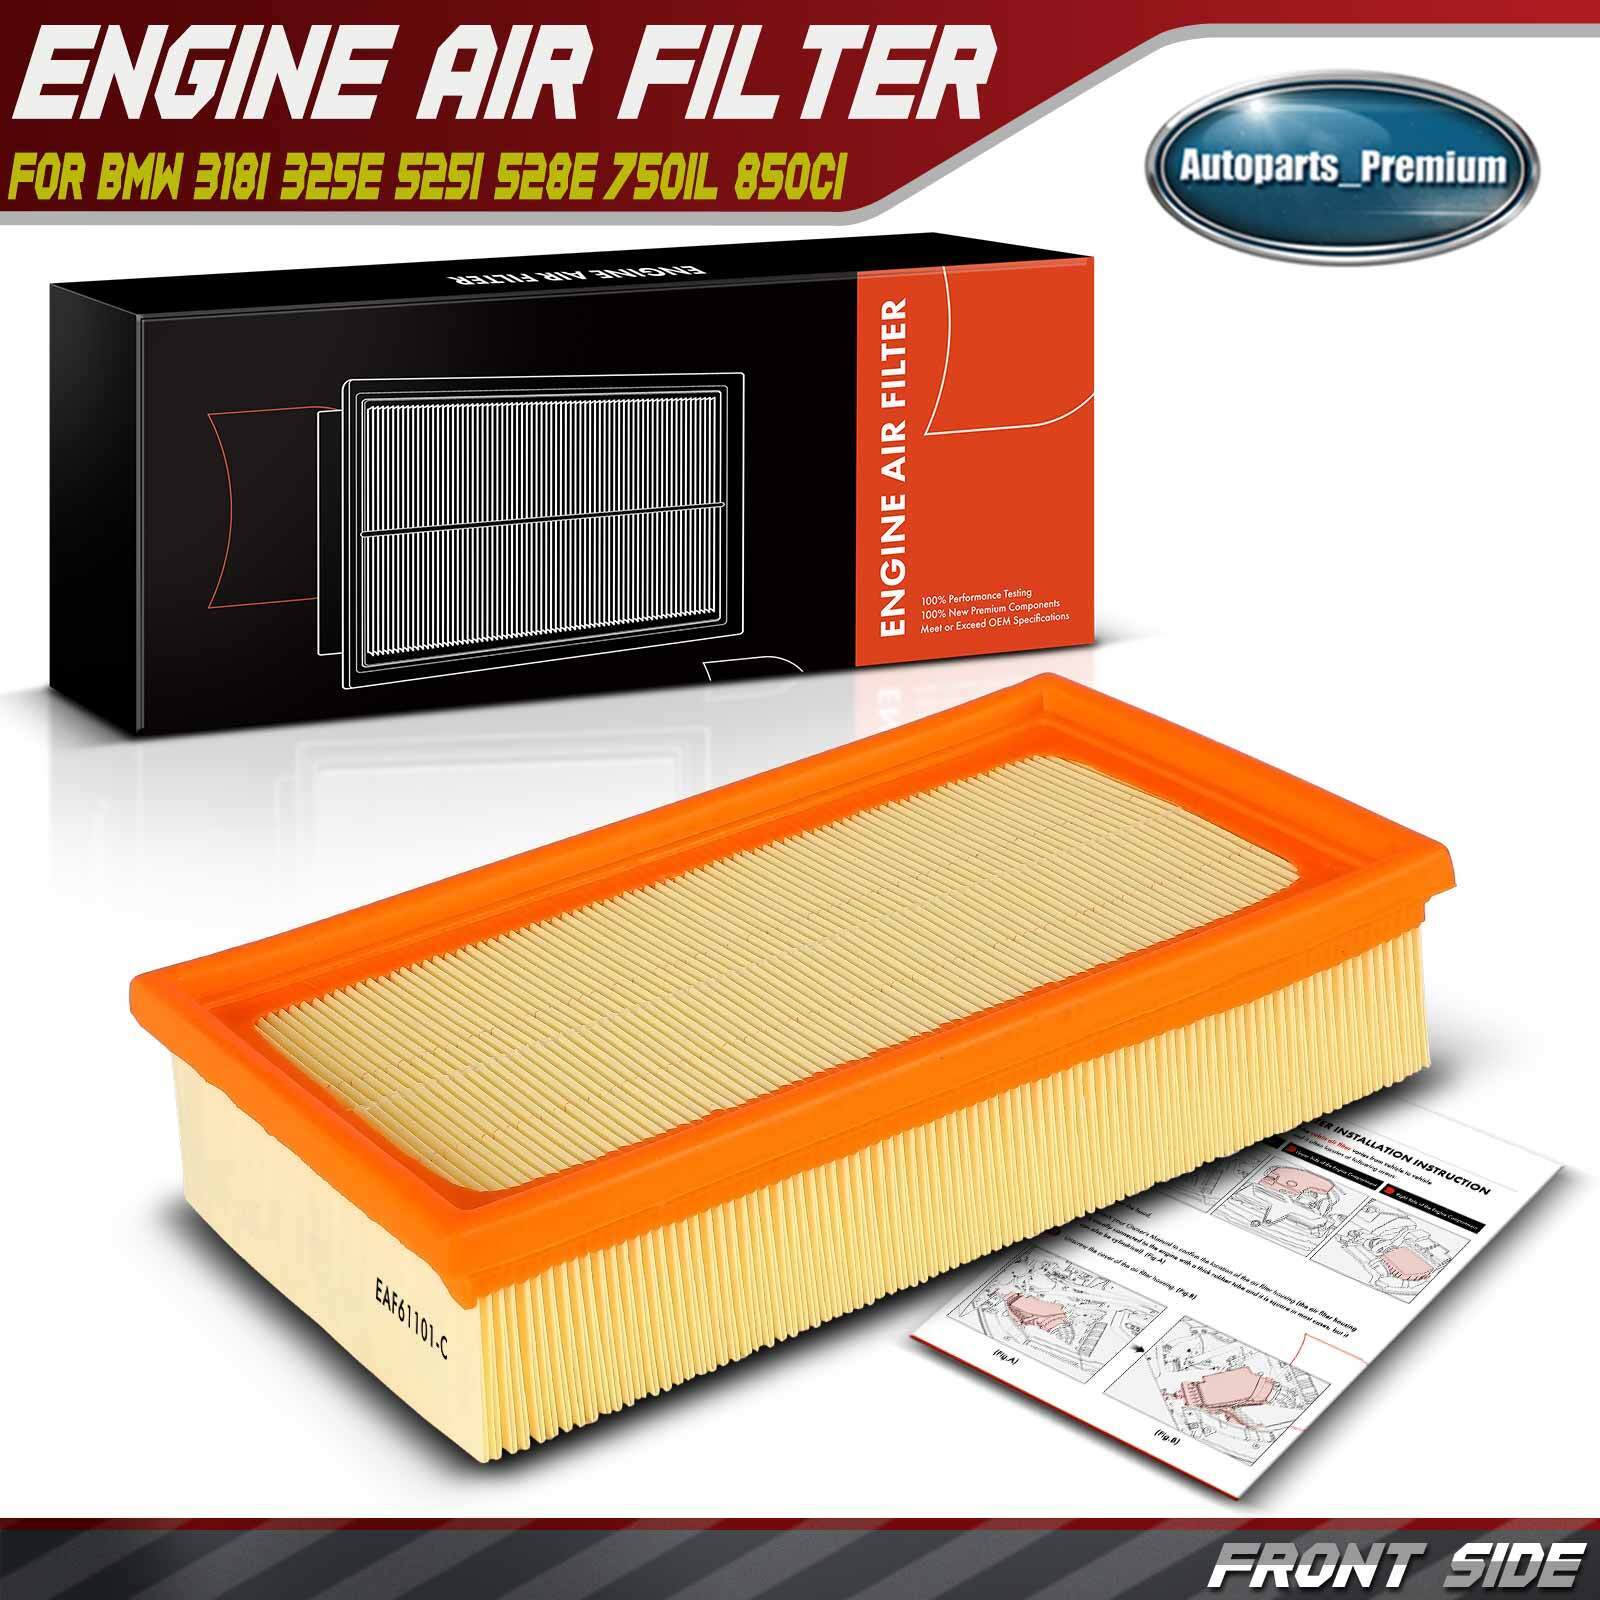 Engine Air Filter for BMW E30/E36 318i 318is 325e 525i 528e 750iL E31 850Ci 850i